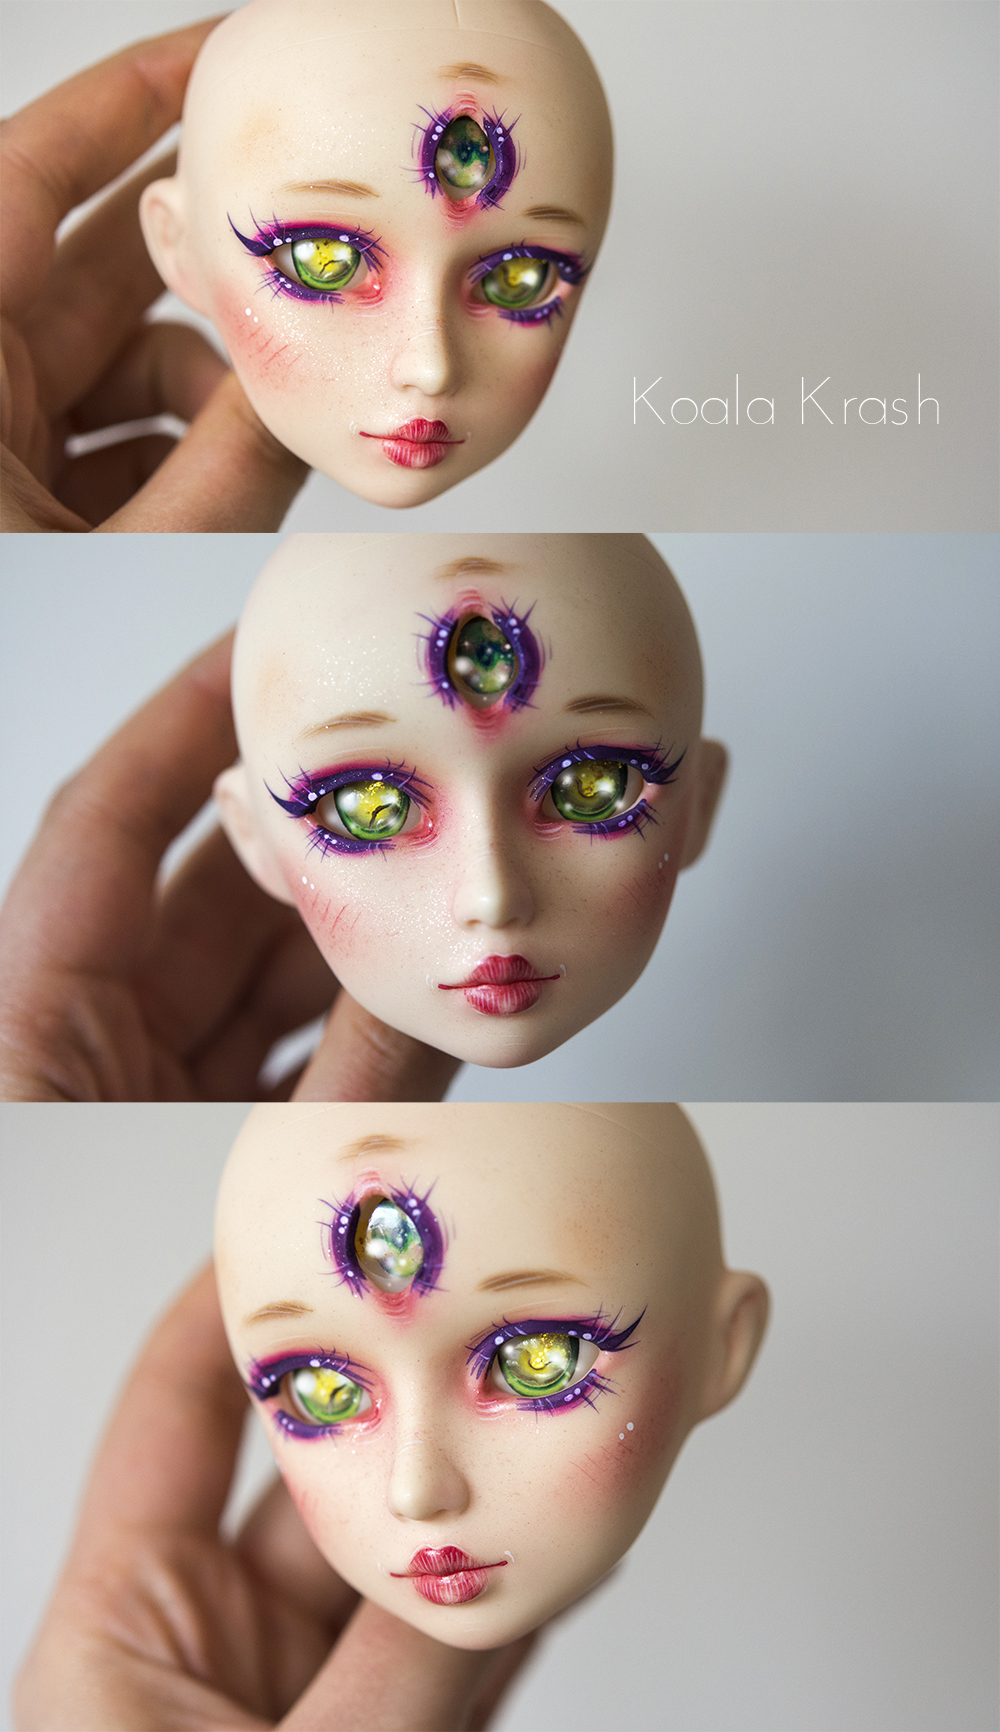 [Make-up] ♥  KOALA KRASH  ♥  ~ Nouveaux maquillages en vrac + heavy mods Yokaï  - Page 25 41955456071_4ed85d9873_o